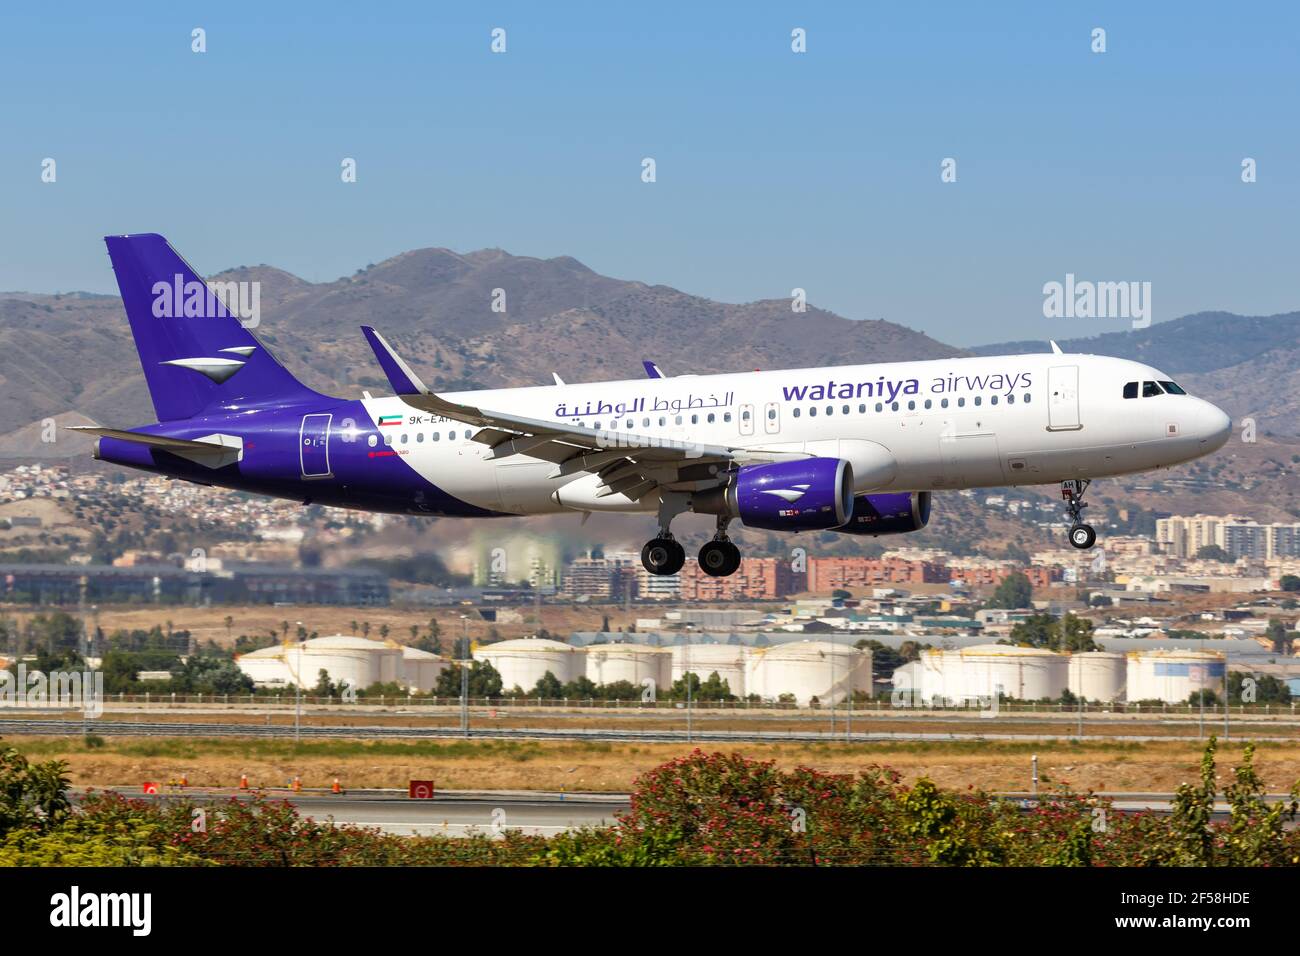 Malaga, Spain - July 28, 2018: Wataniya Airways Airbus A320 airplane at Malaga airport in Spain. Airbus is a European aircraft manufacturer based in T Stock Photo